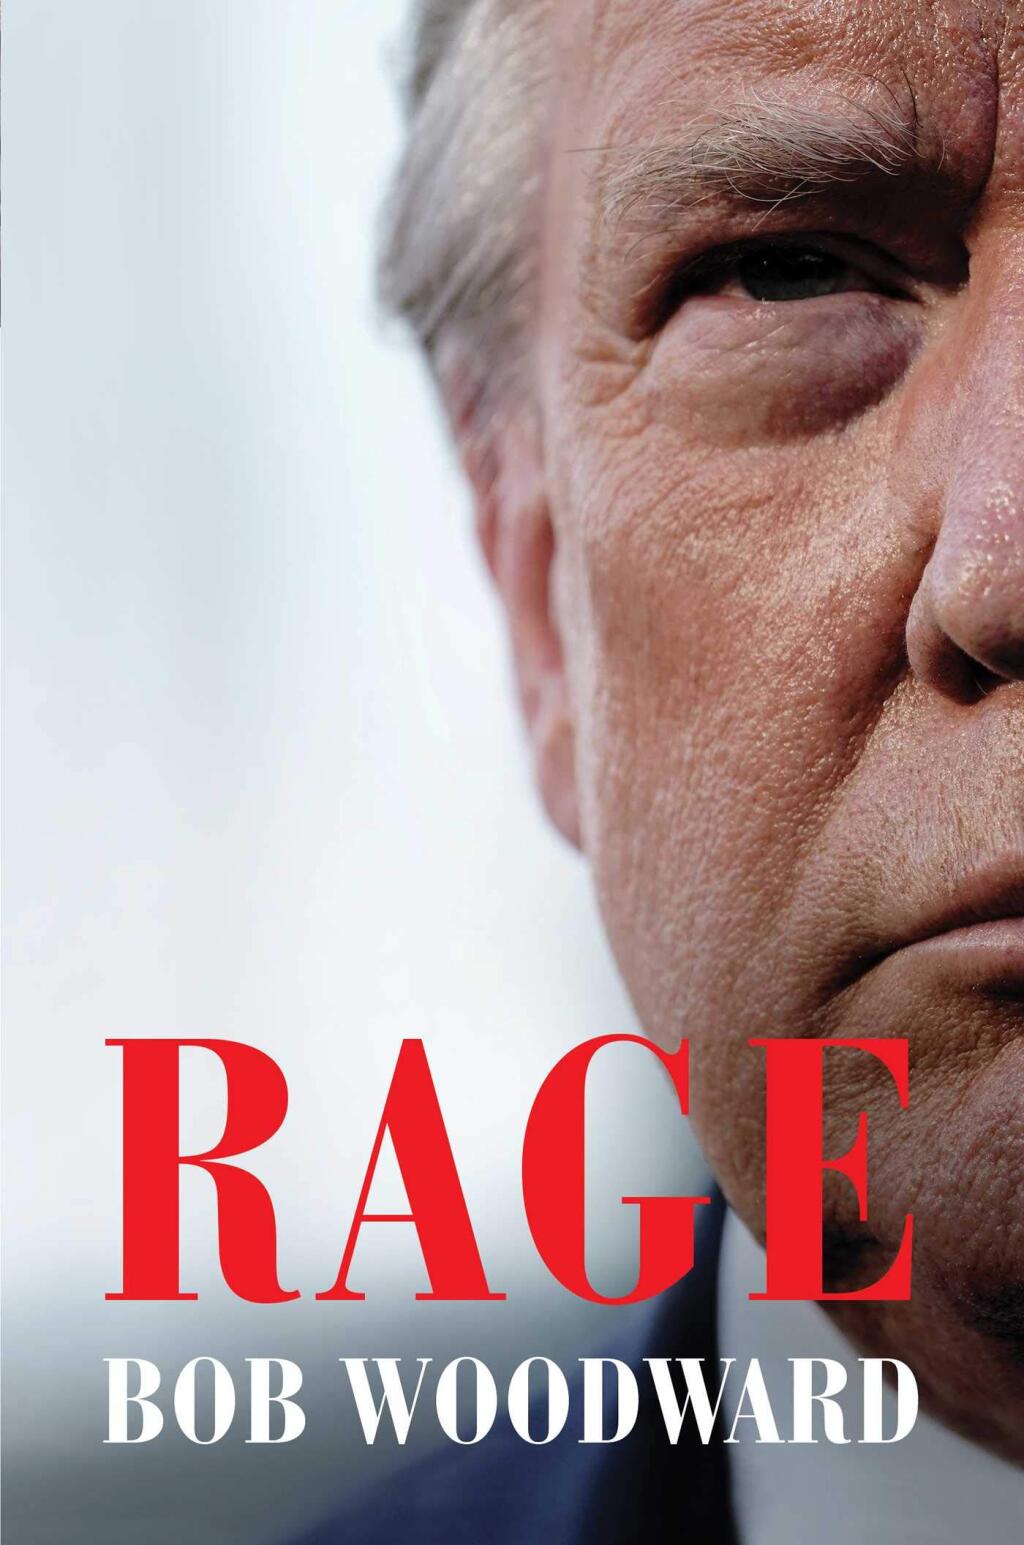 NEW No. 1.:  Bob Woodward’s “Rage” is the top selling book in Petaluma.